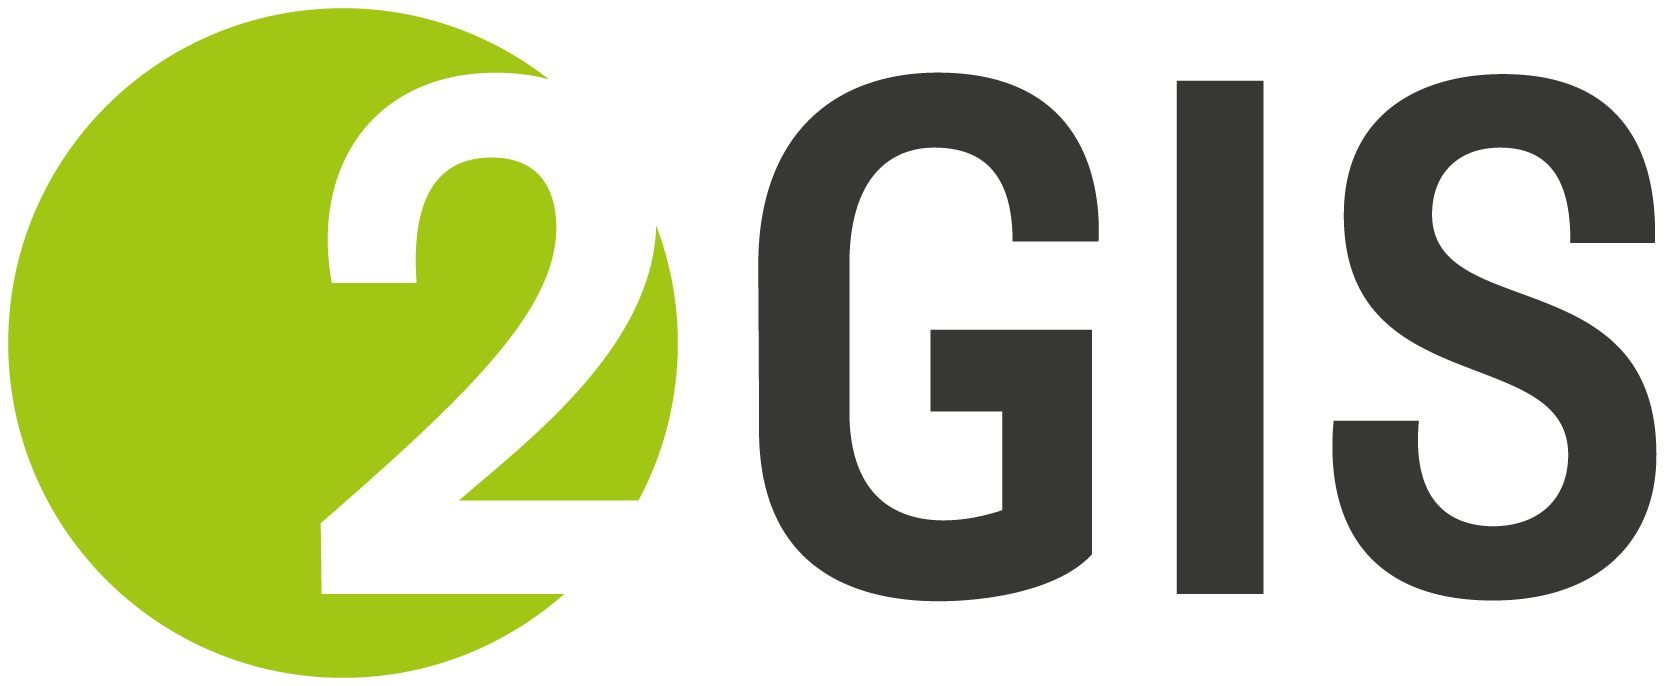 File:2GIS logo.png - Wikimedia Commons